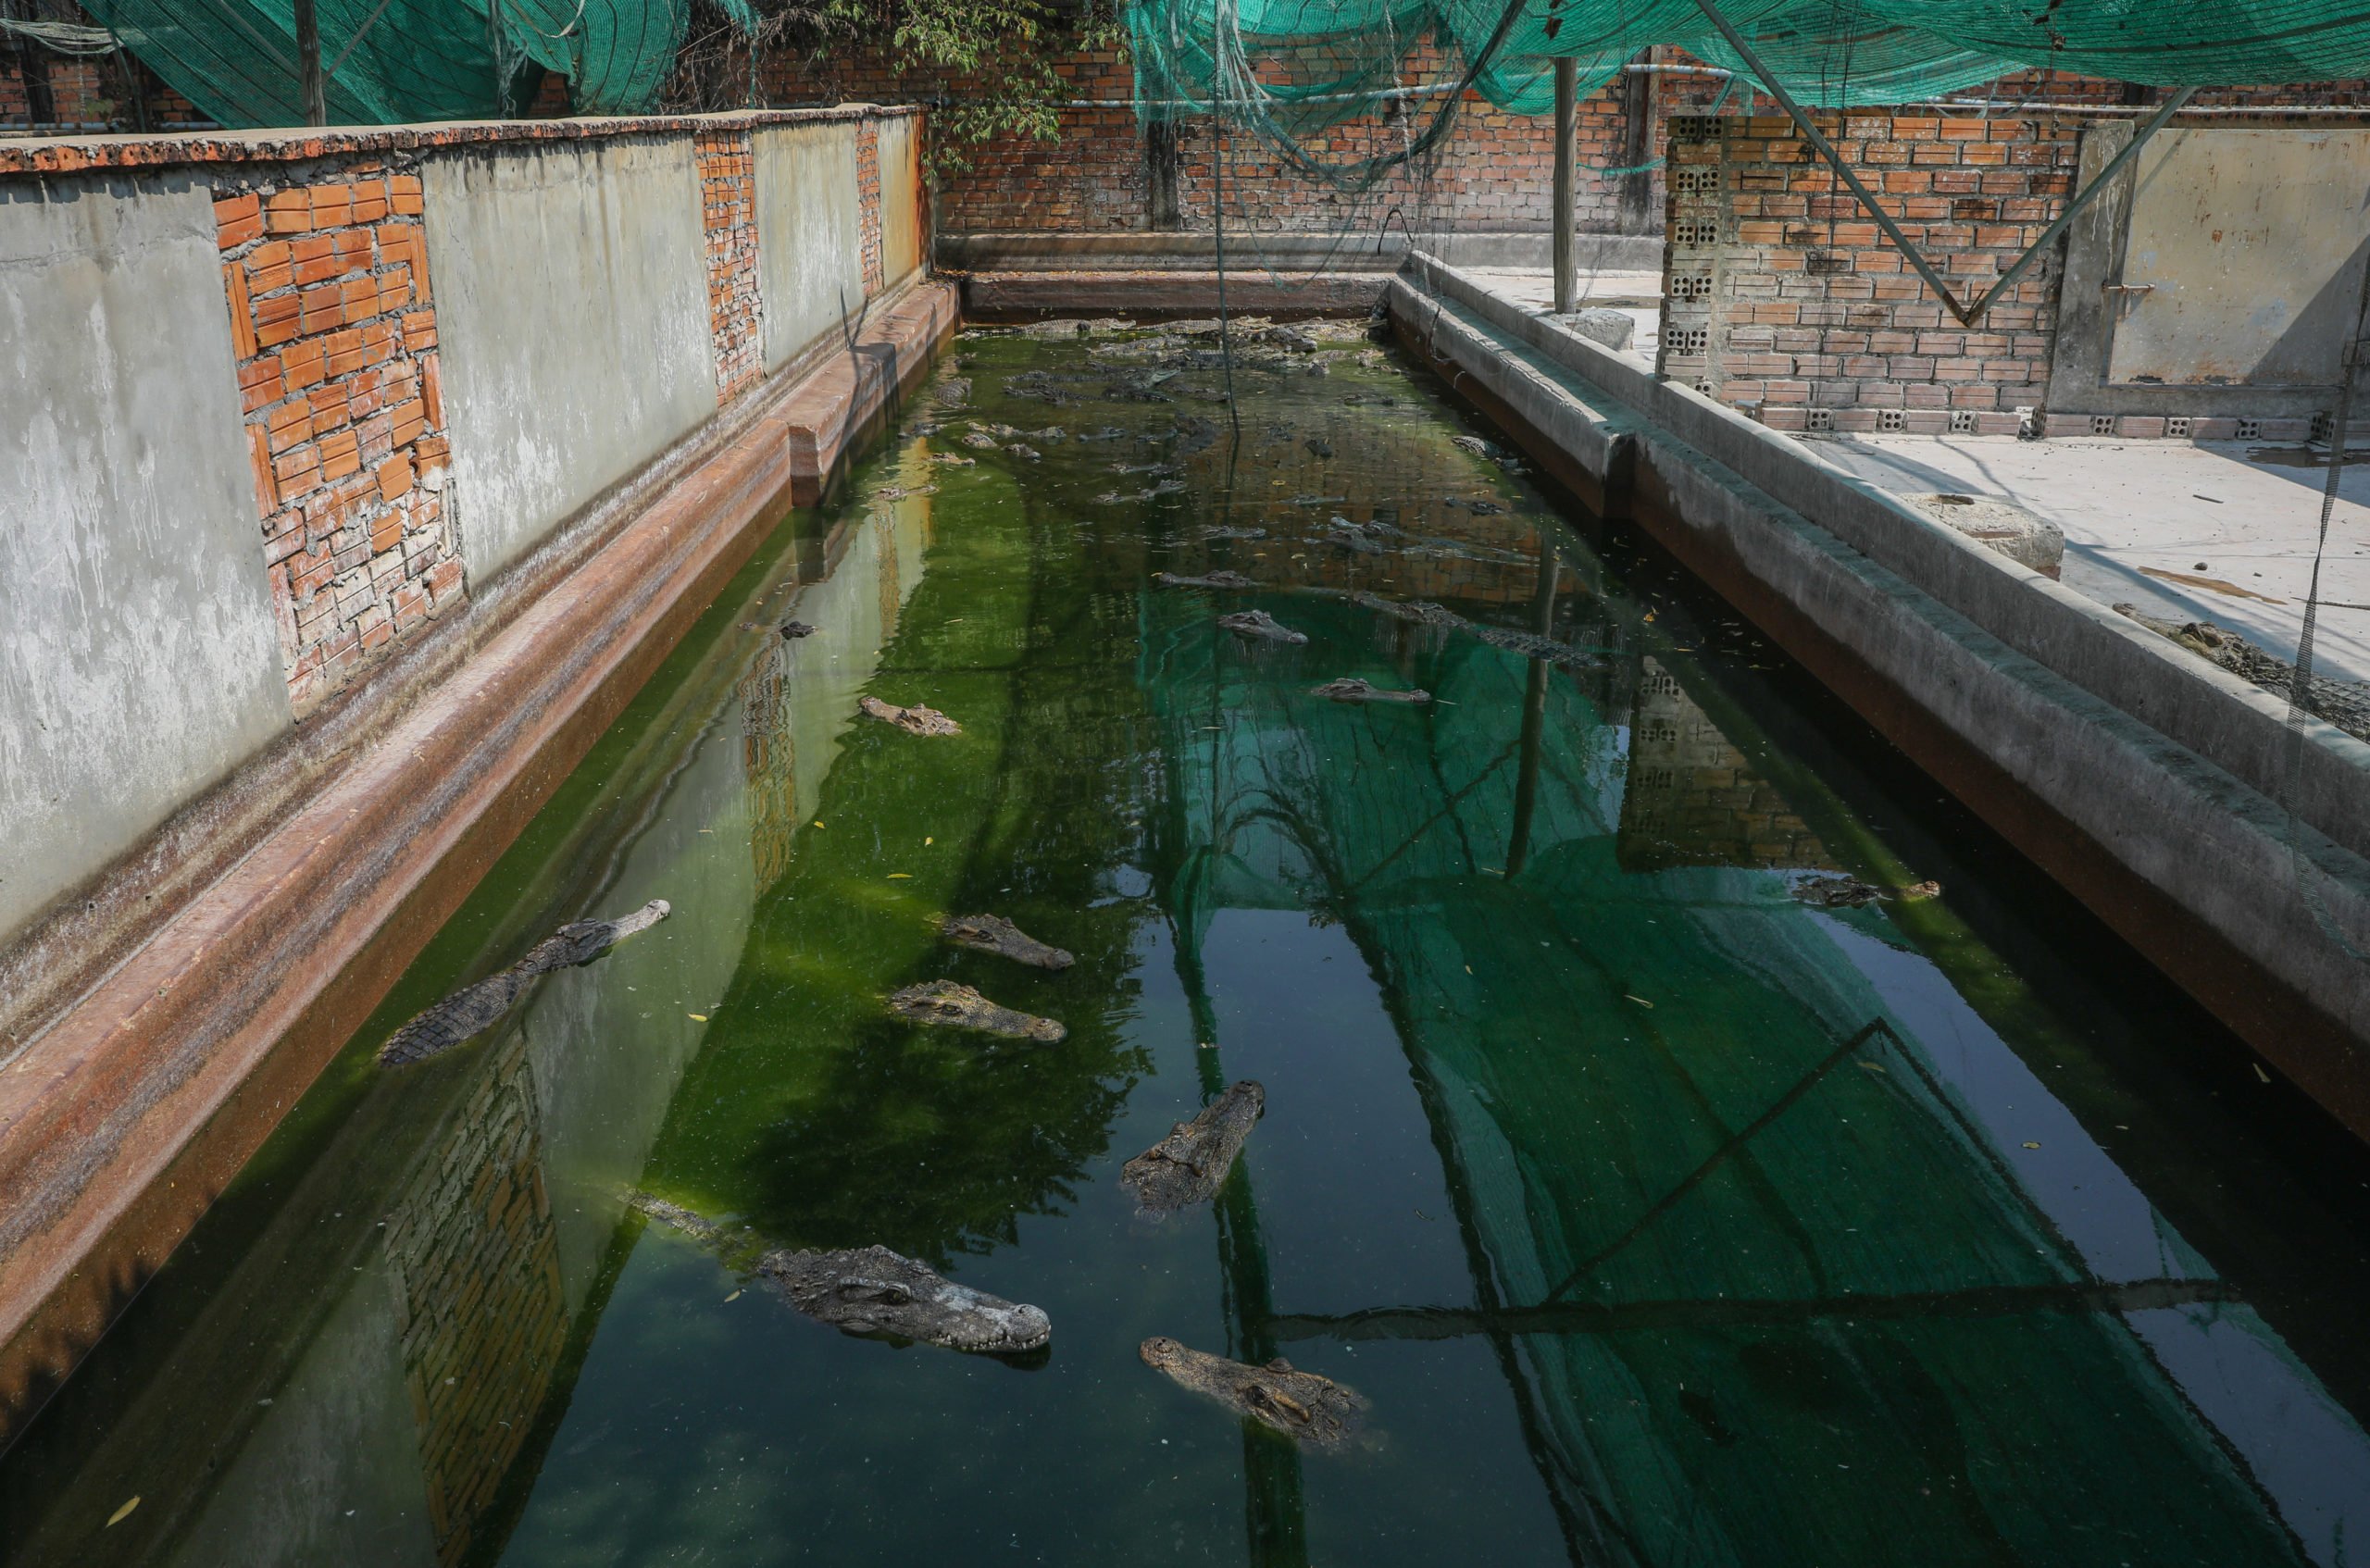 Siamese and hybrid crocodiles in a pool at a crocodile farm in Siem Reap, Cambodia